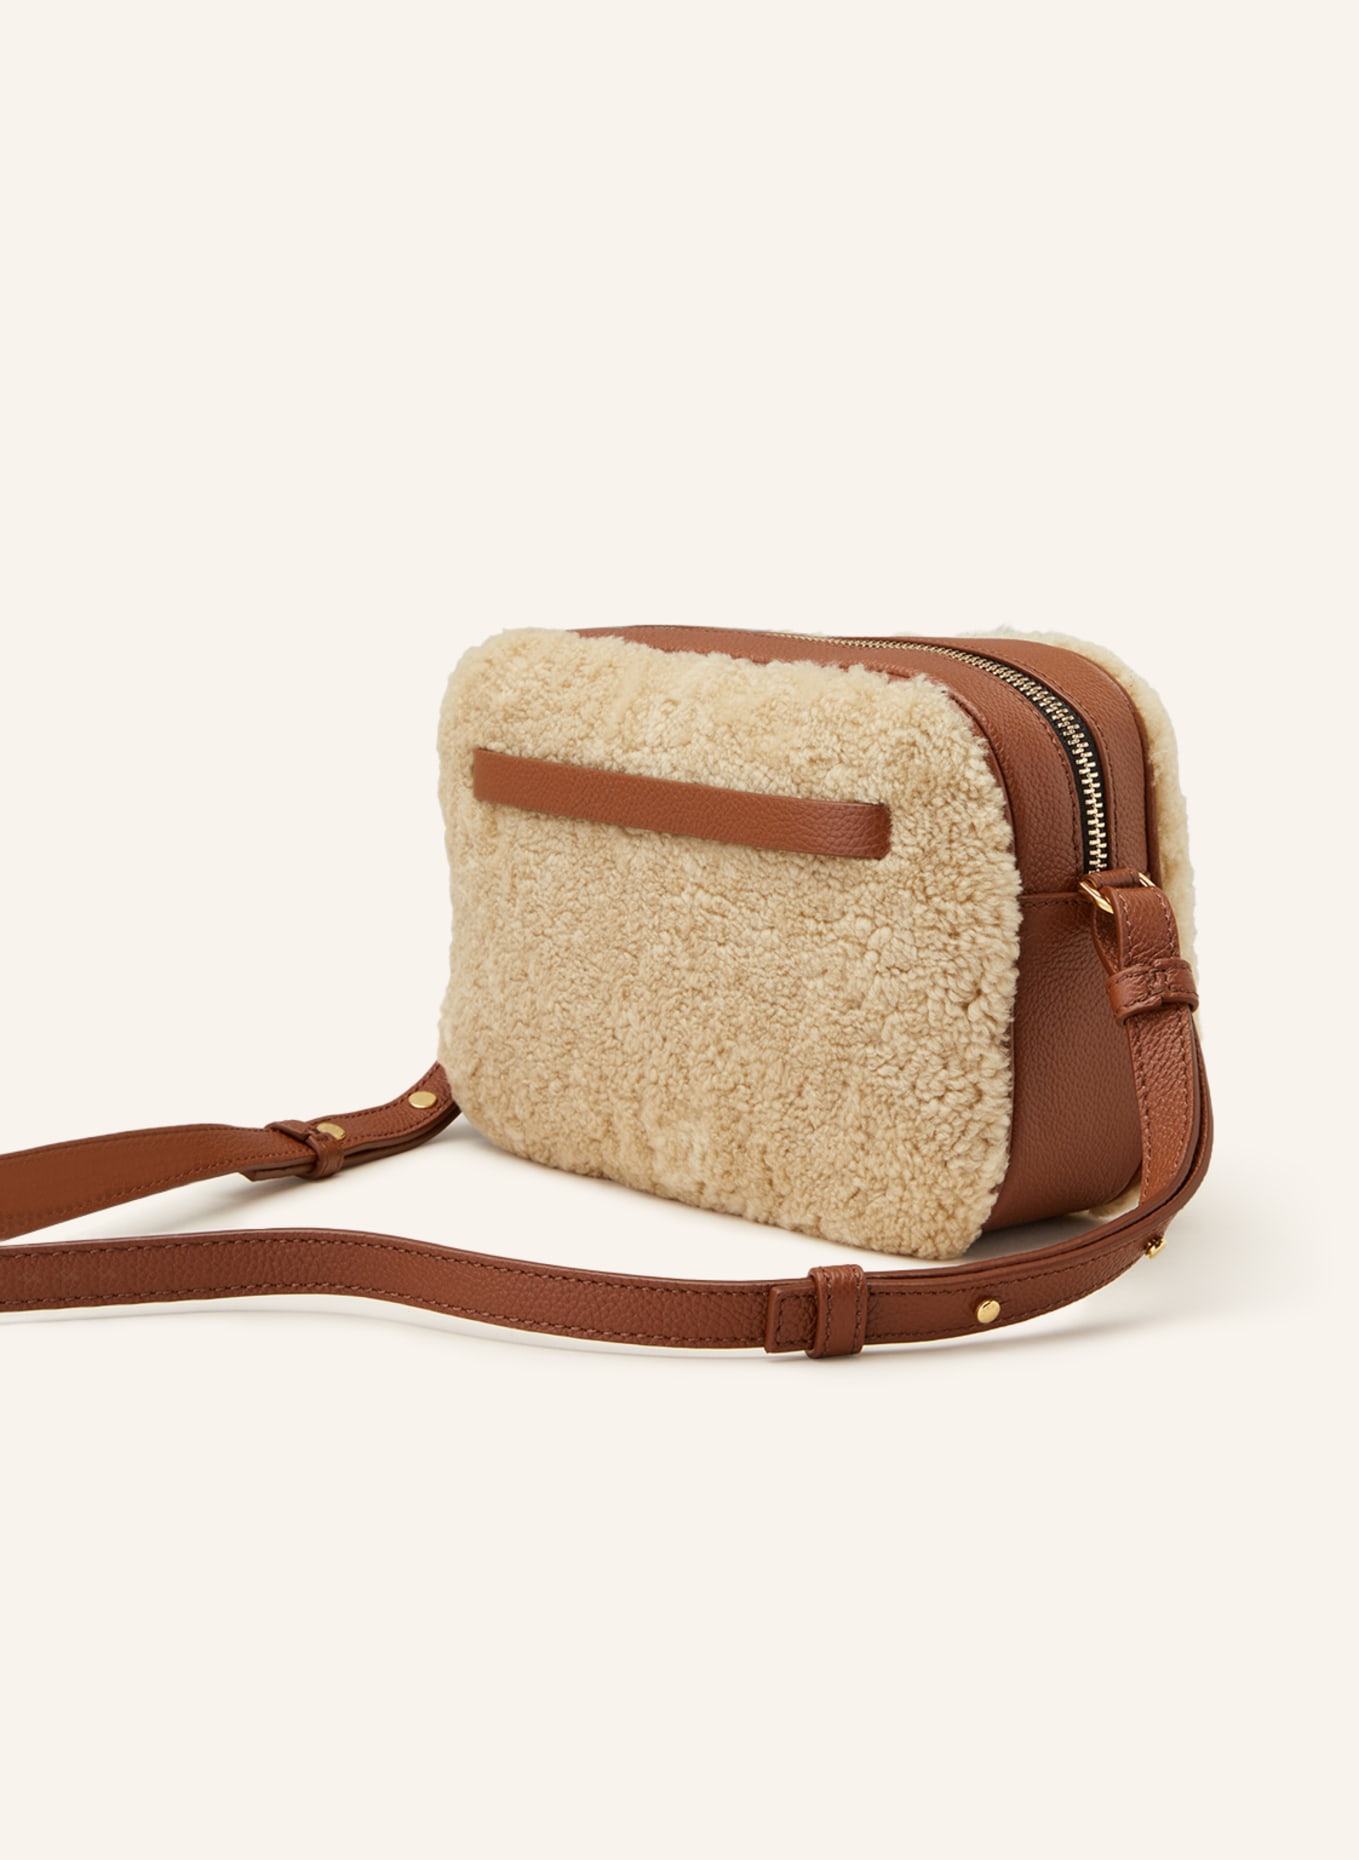 Crossbody Bags for Women - Real Leather Multi Pocket Travel Purse and Sling  Bag (Mocha) - Walmart.com